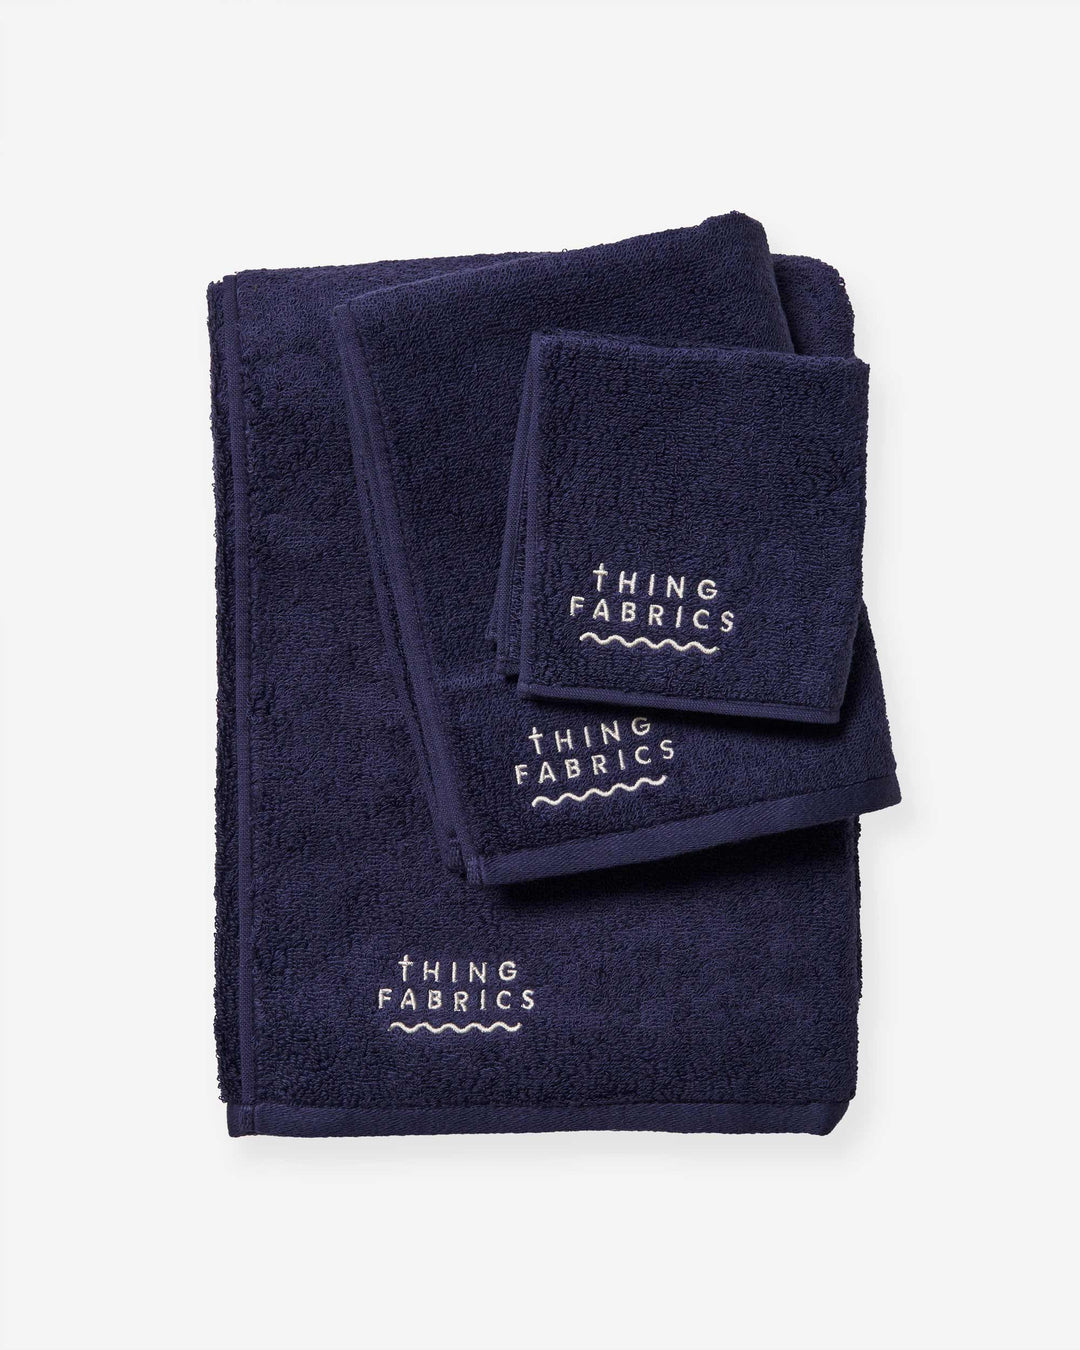 TIP TOP 365 Towel Gift Box - Navy